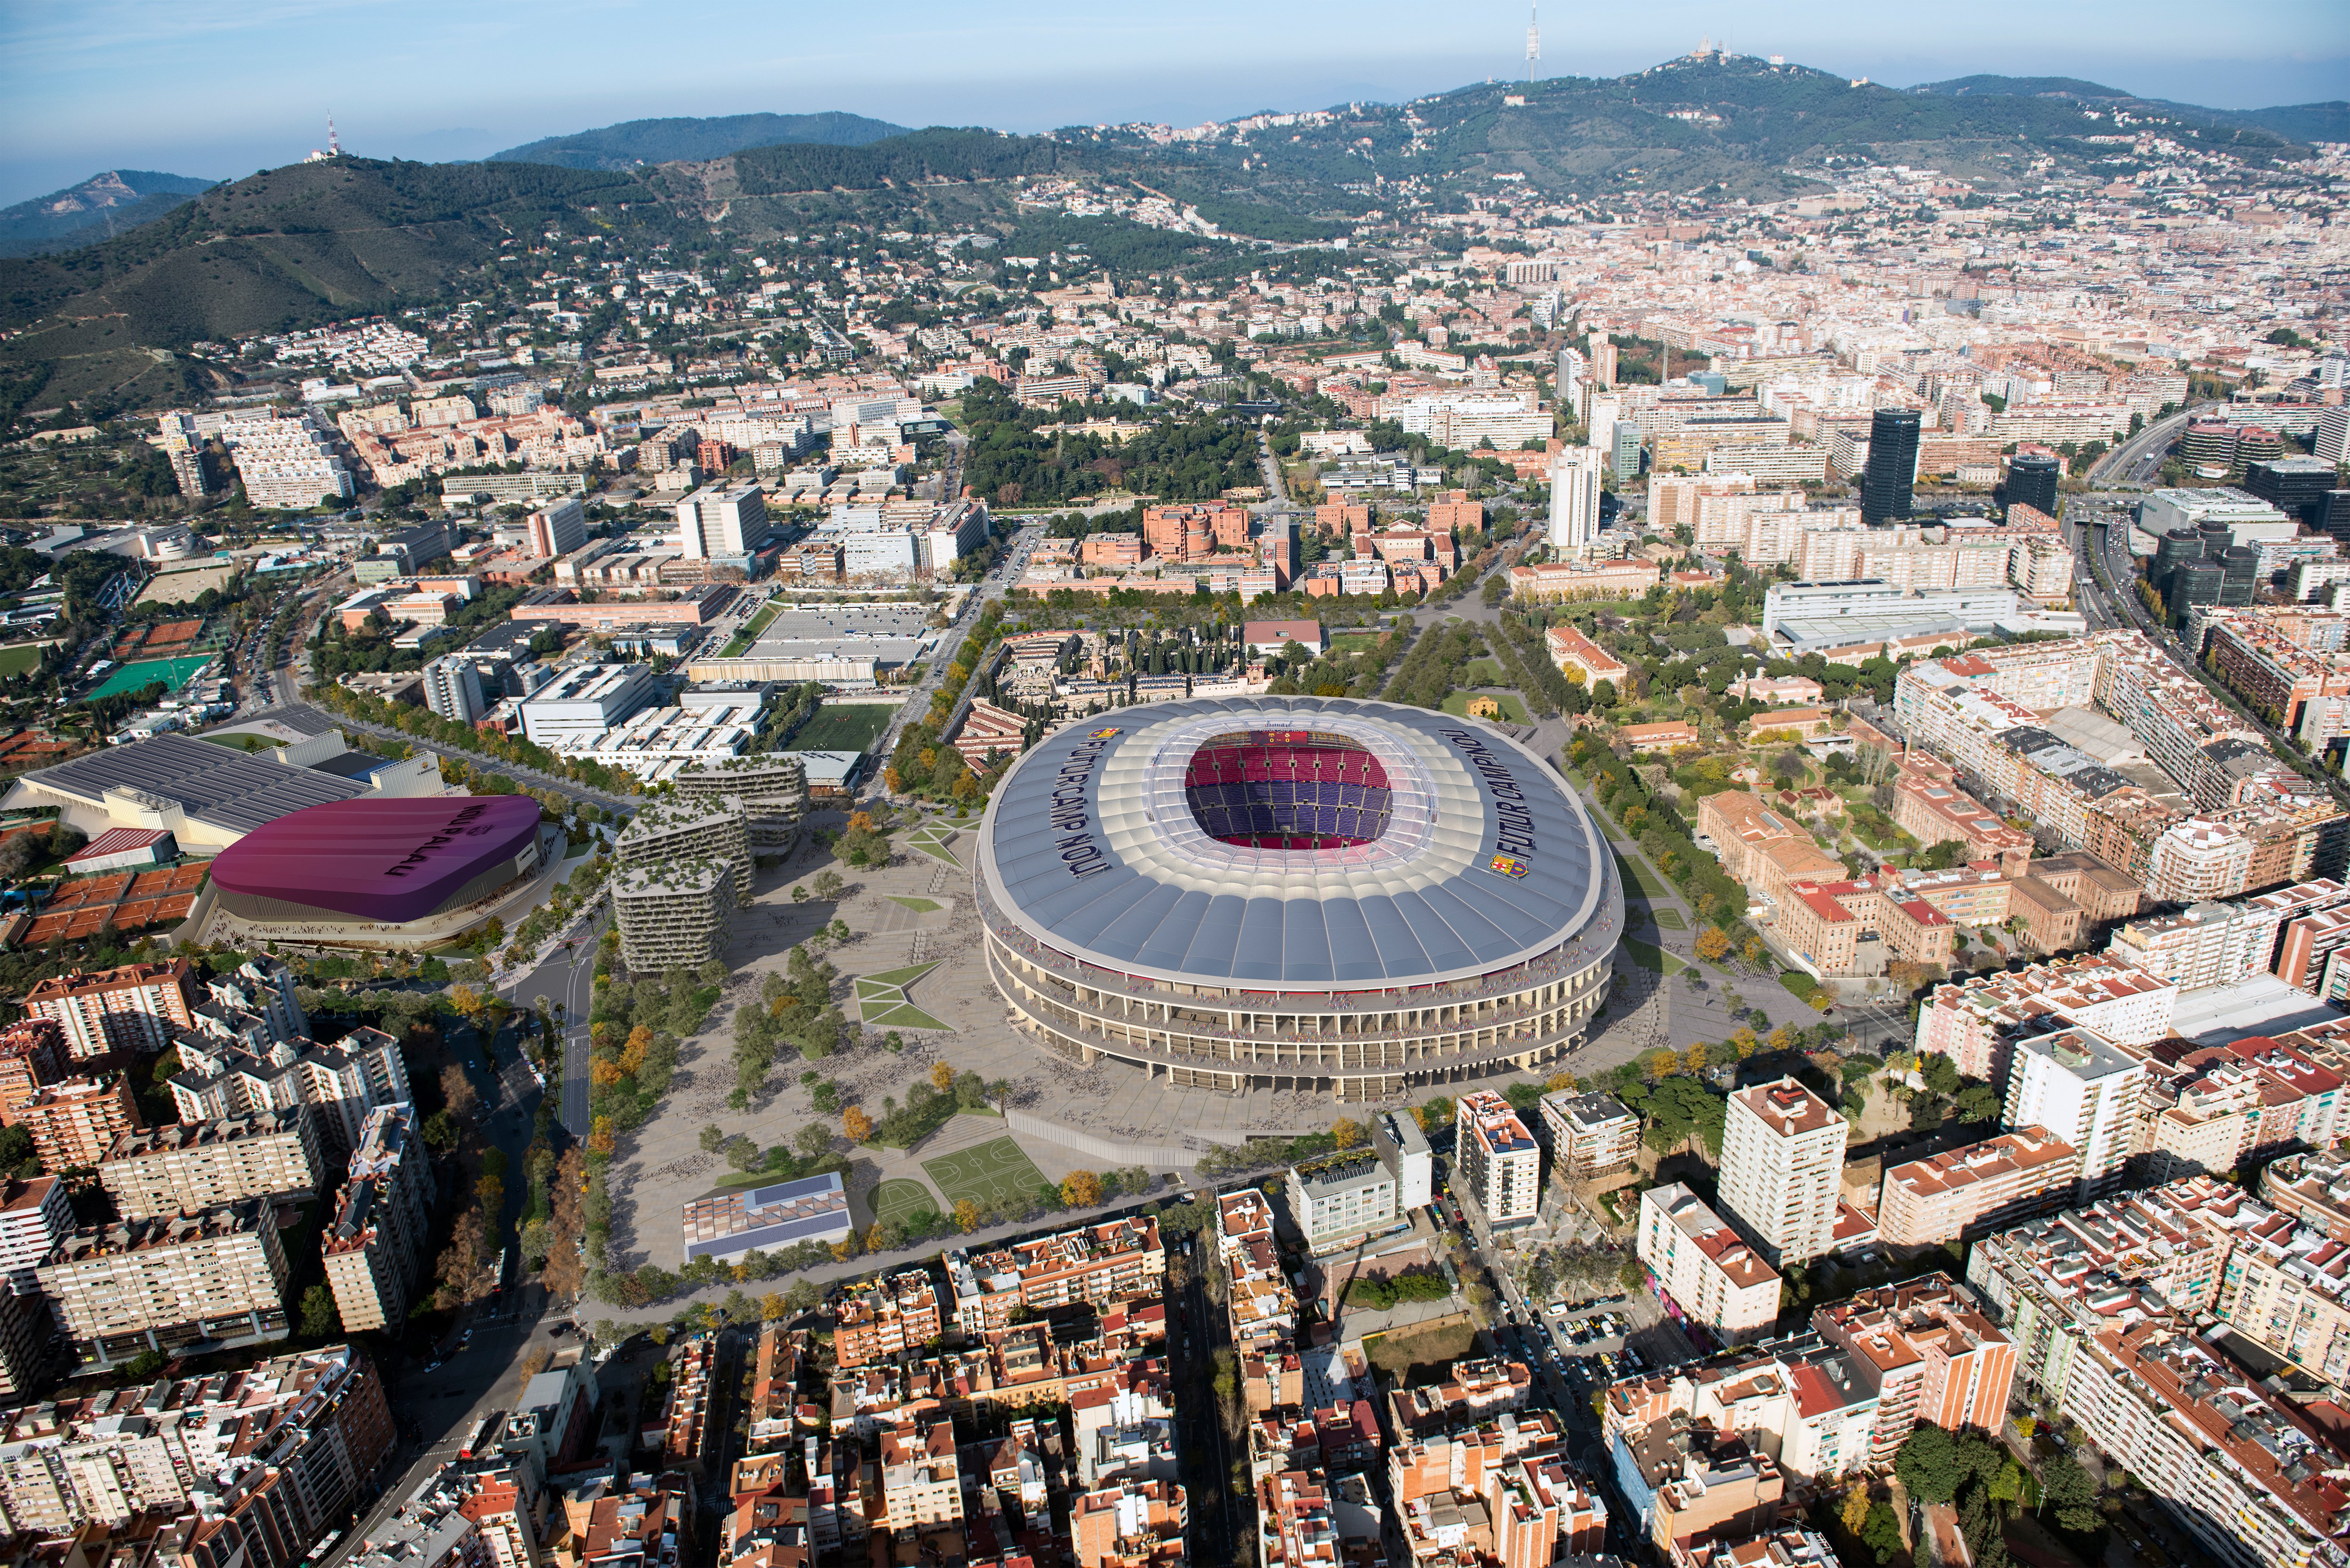 Nueva baja sensible en el organigrama del Barça: dimite el director del Espai Barça